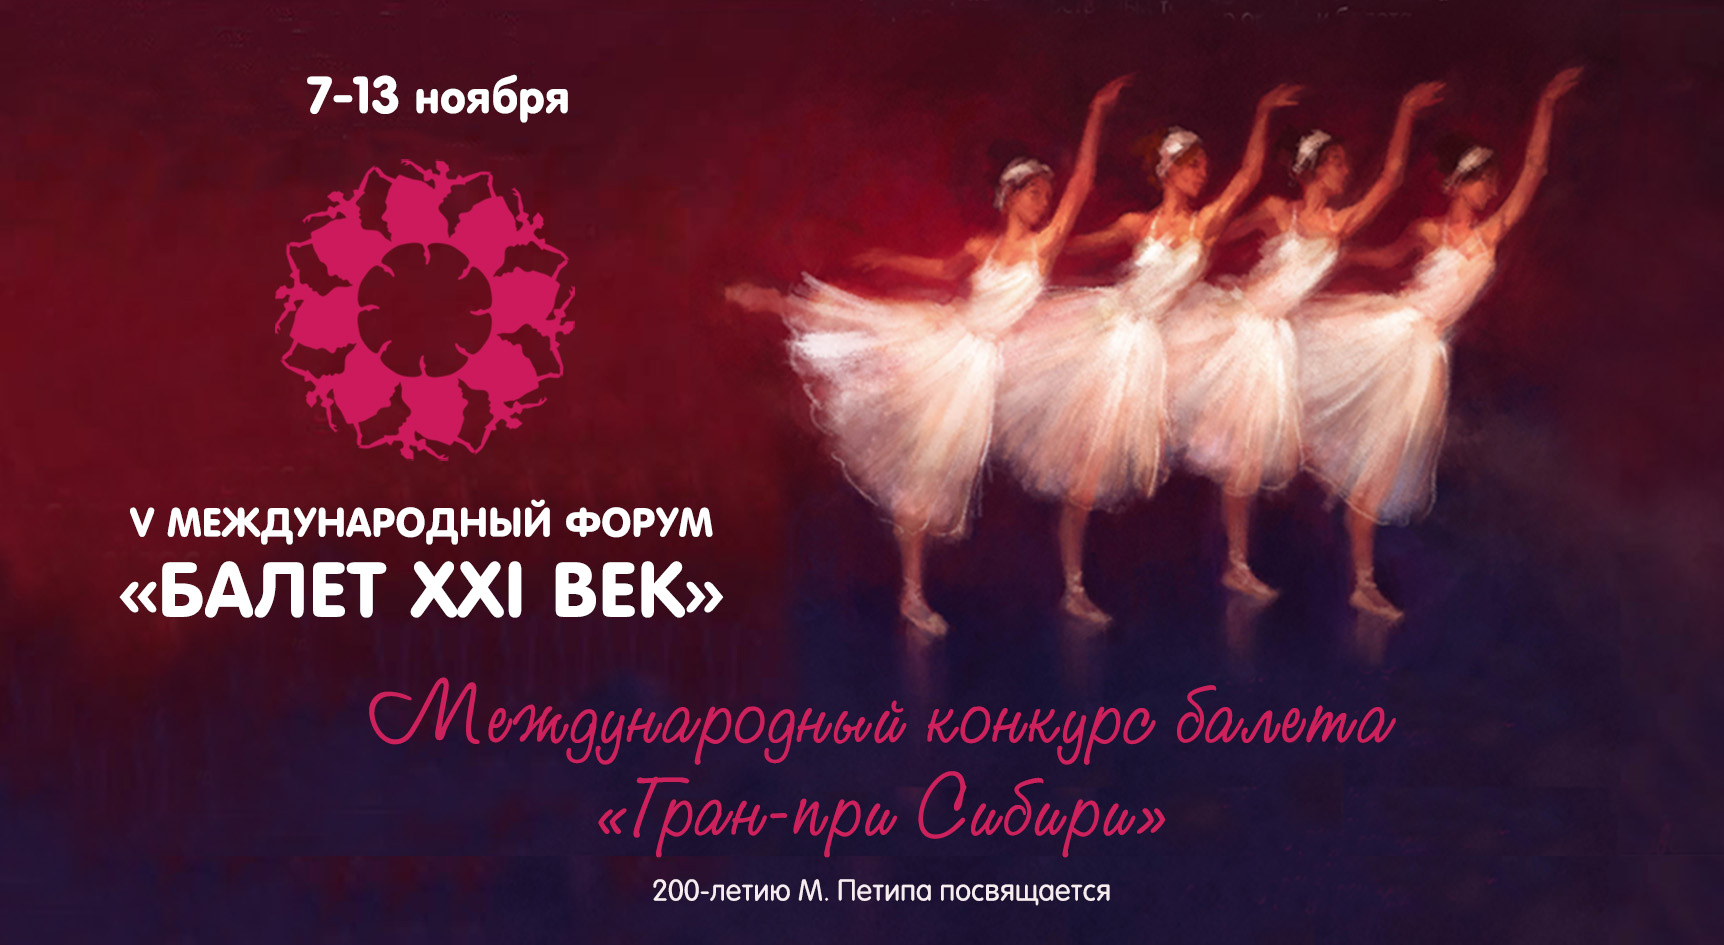 V International forum "Ballet XXI Century"